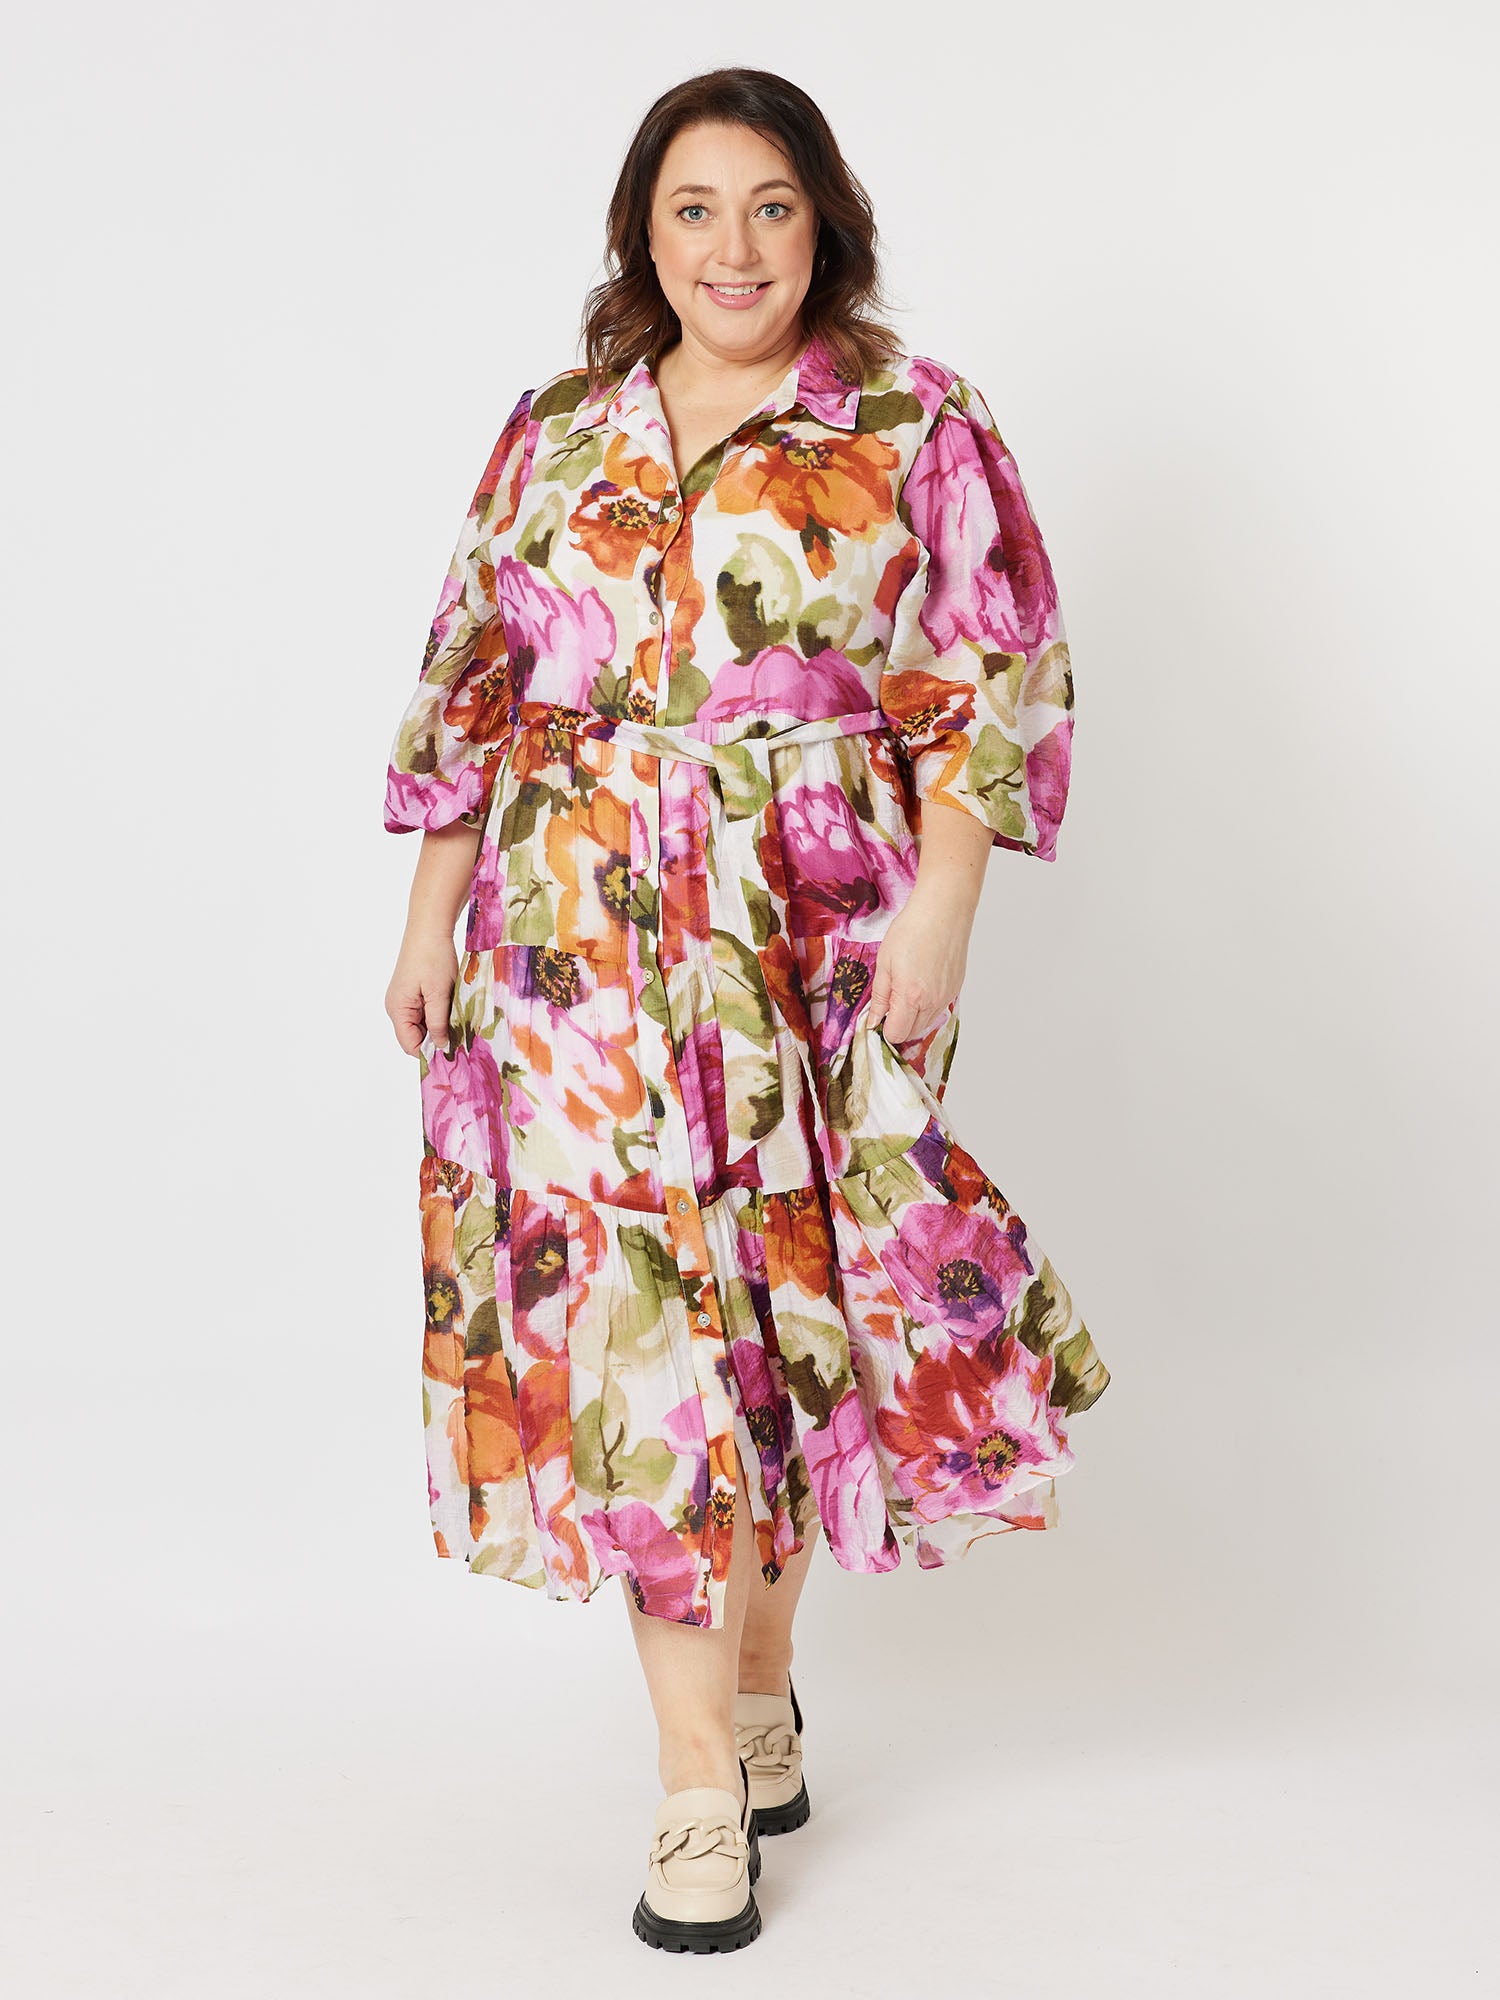 Maui Floral Print Dress - Berry